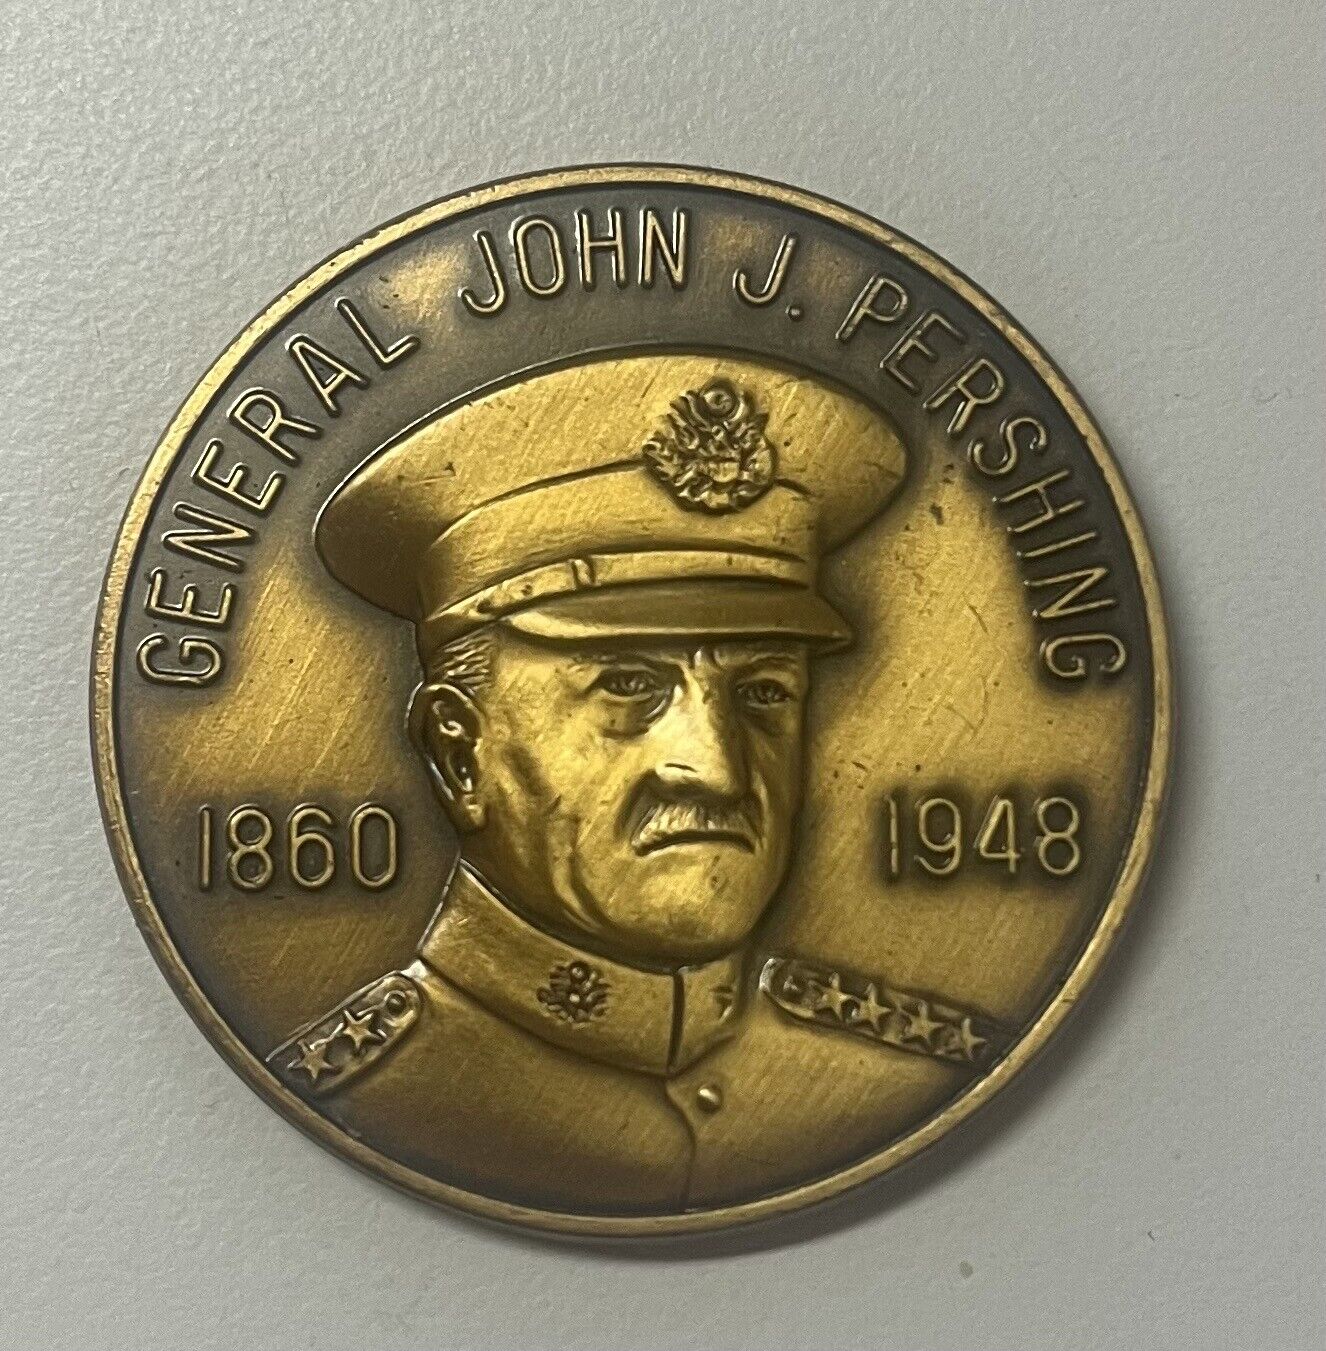 Rare 1976 General John J Pershing Medallion 1860-1948 Linn County Missouri